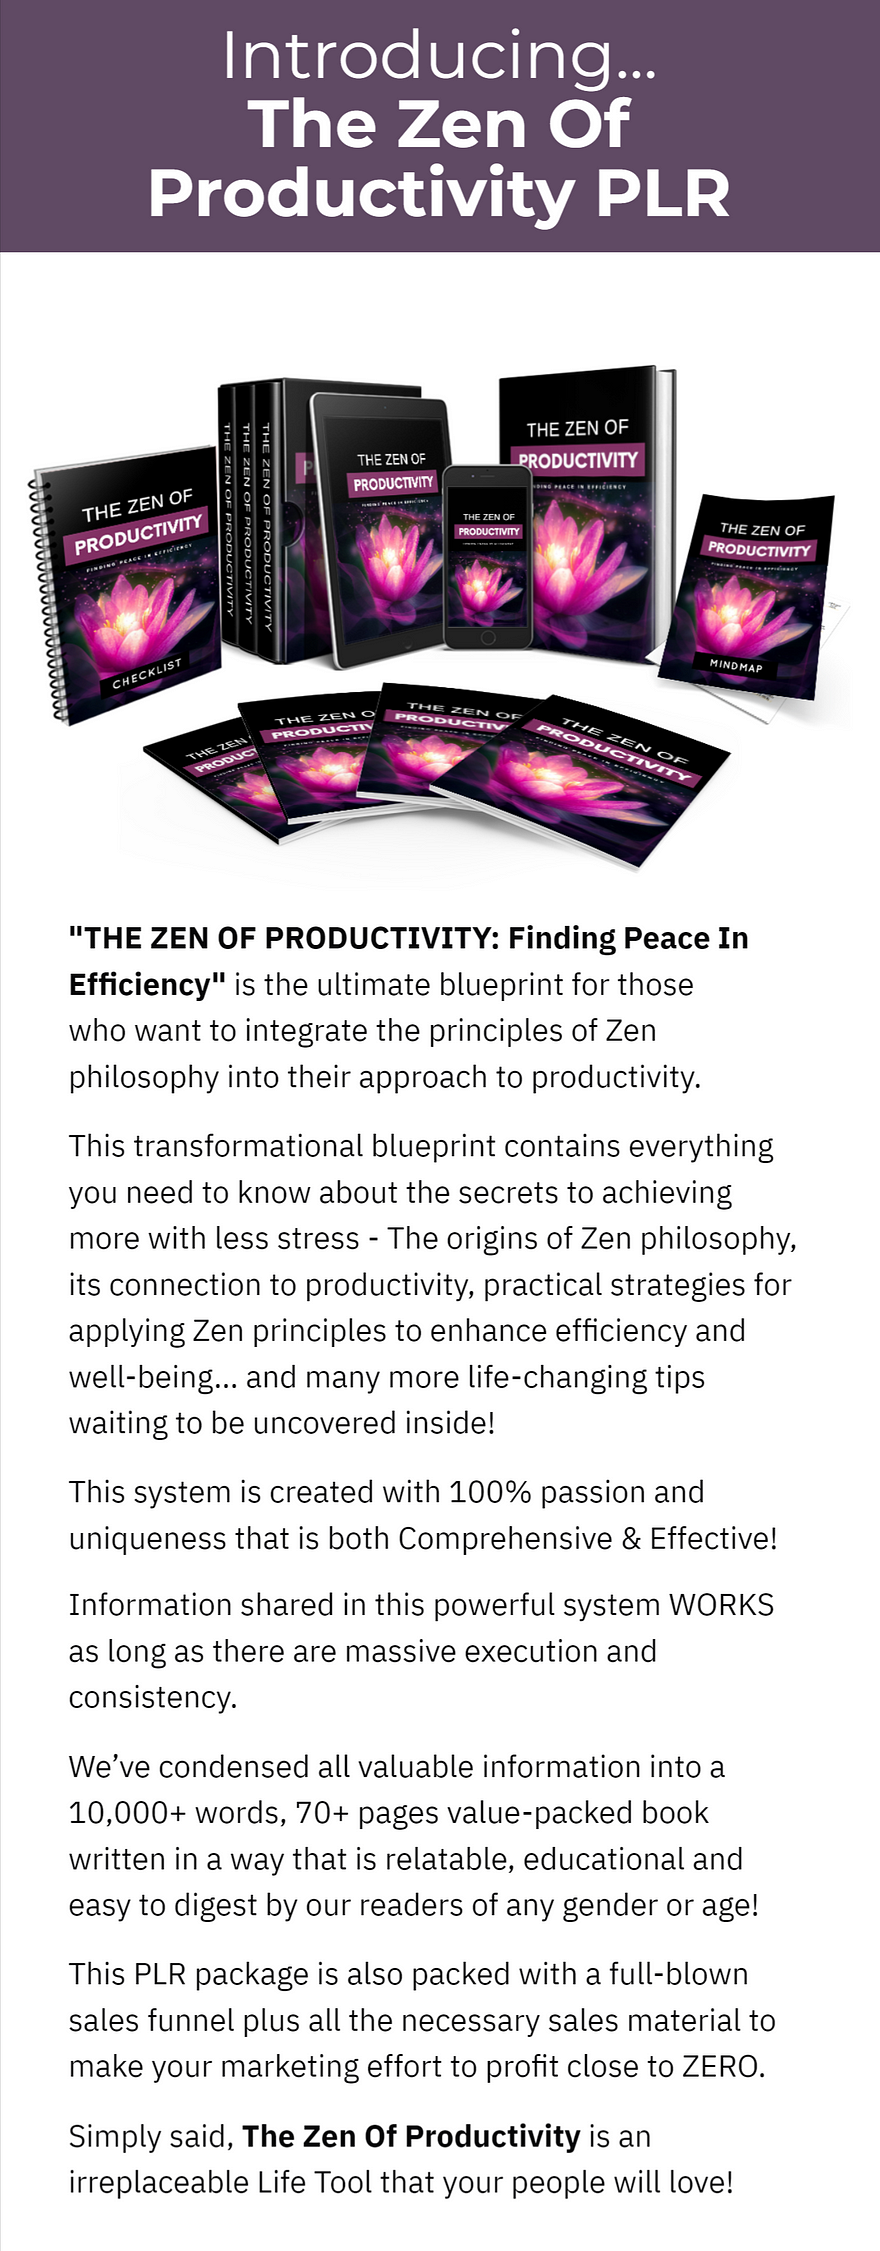 The Zen of Productivity